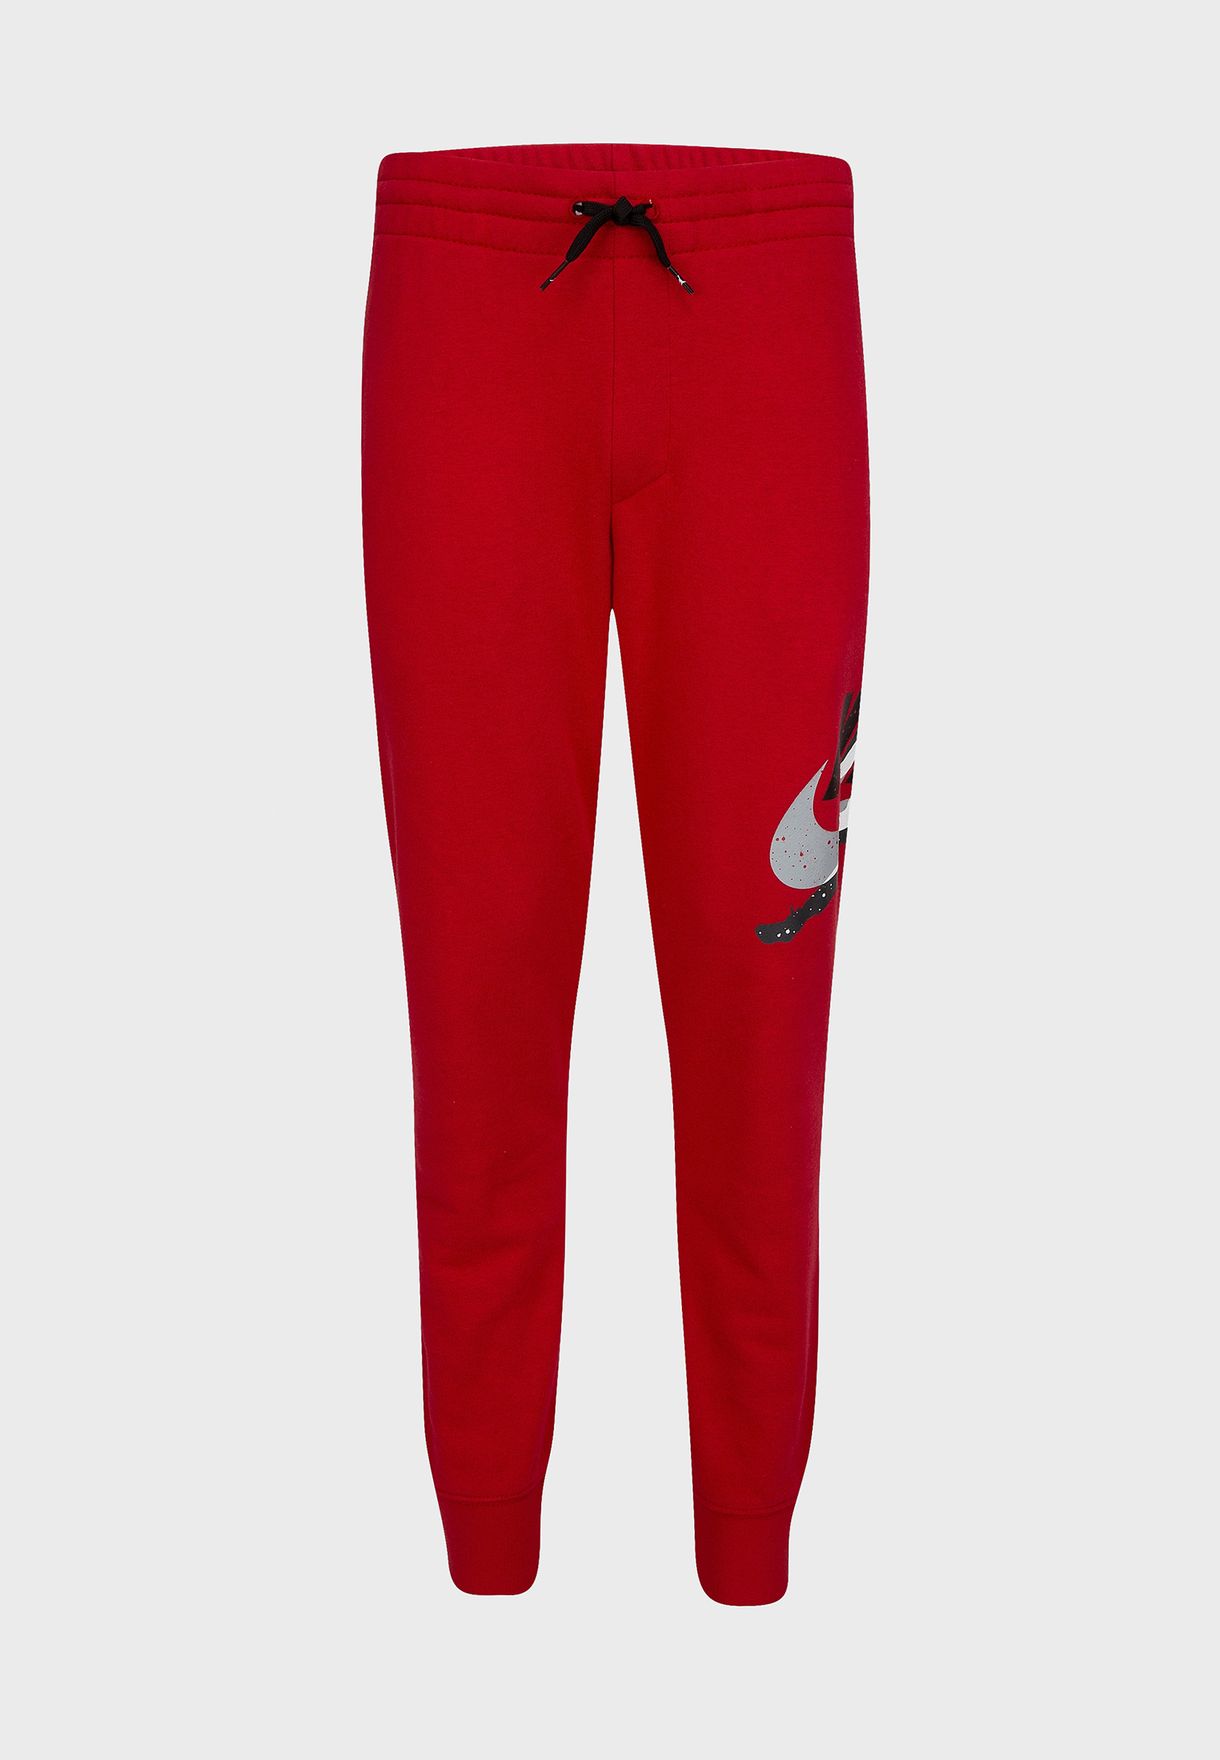 Buy > kids red sweatpants > in stock